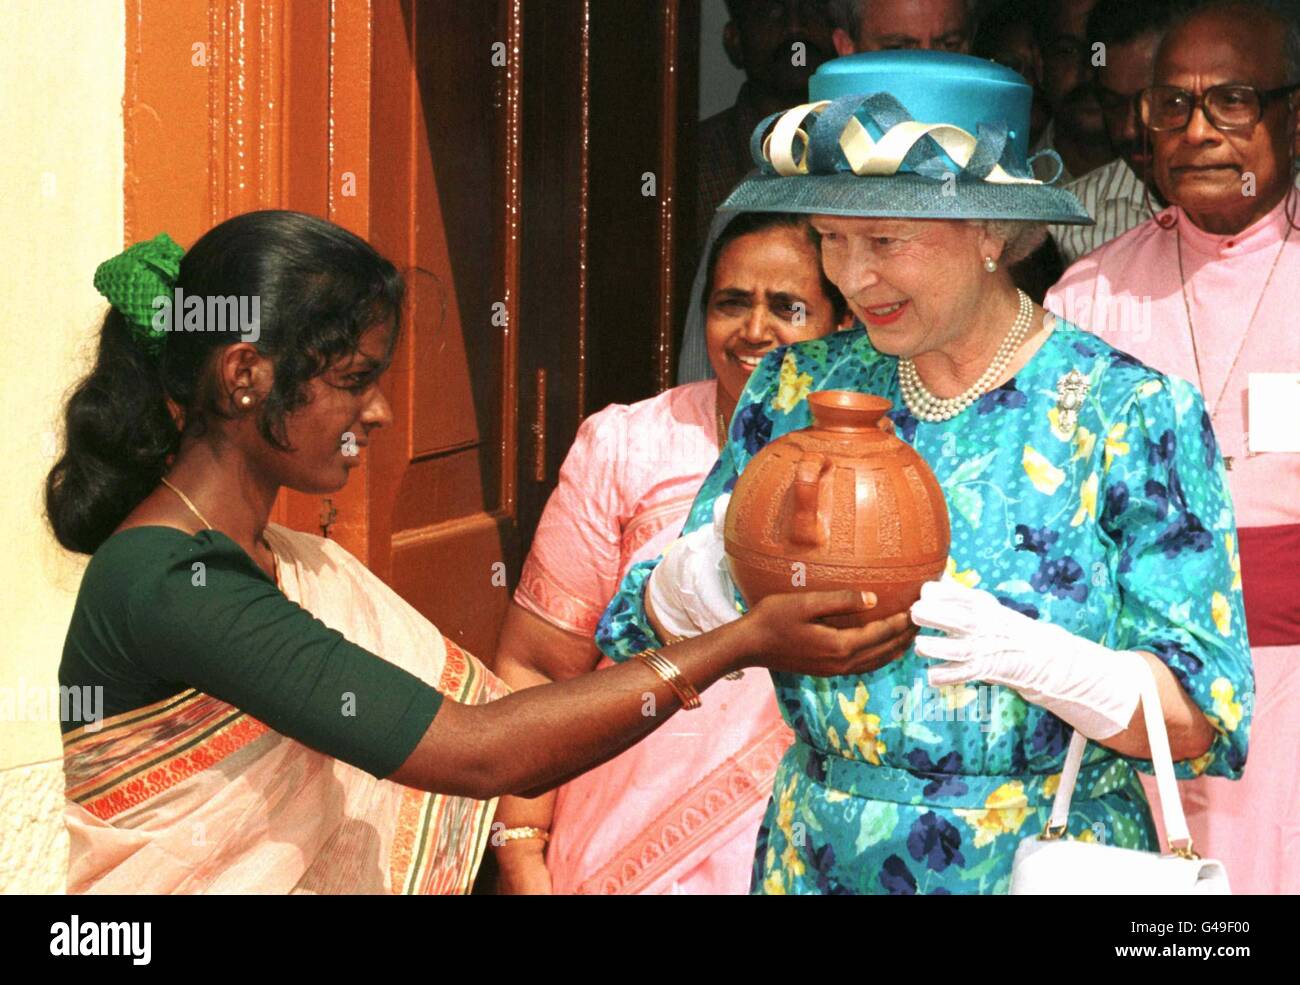 Royalty - Queen Elizabeth II Visit to India Stock Photo - Alamy